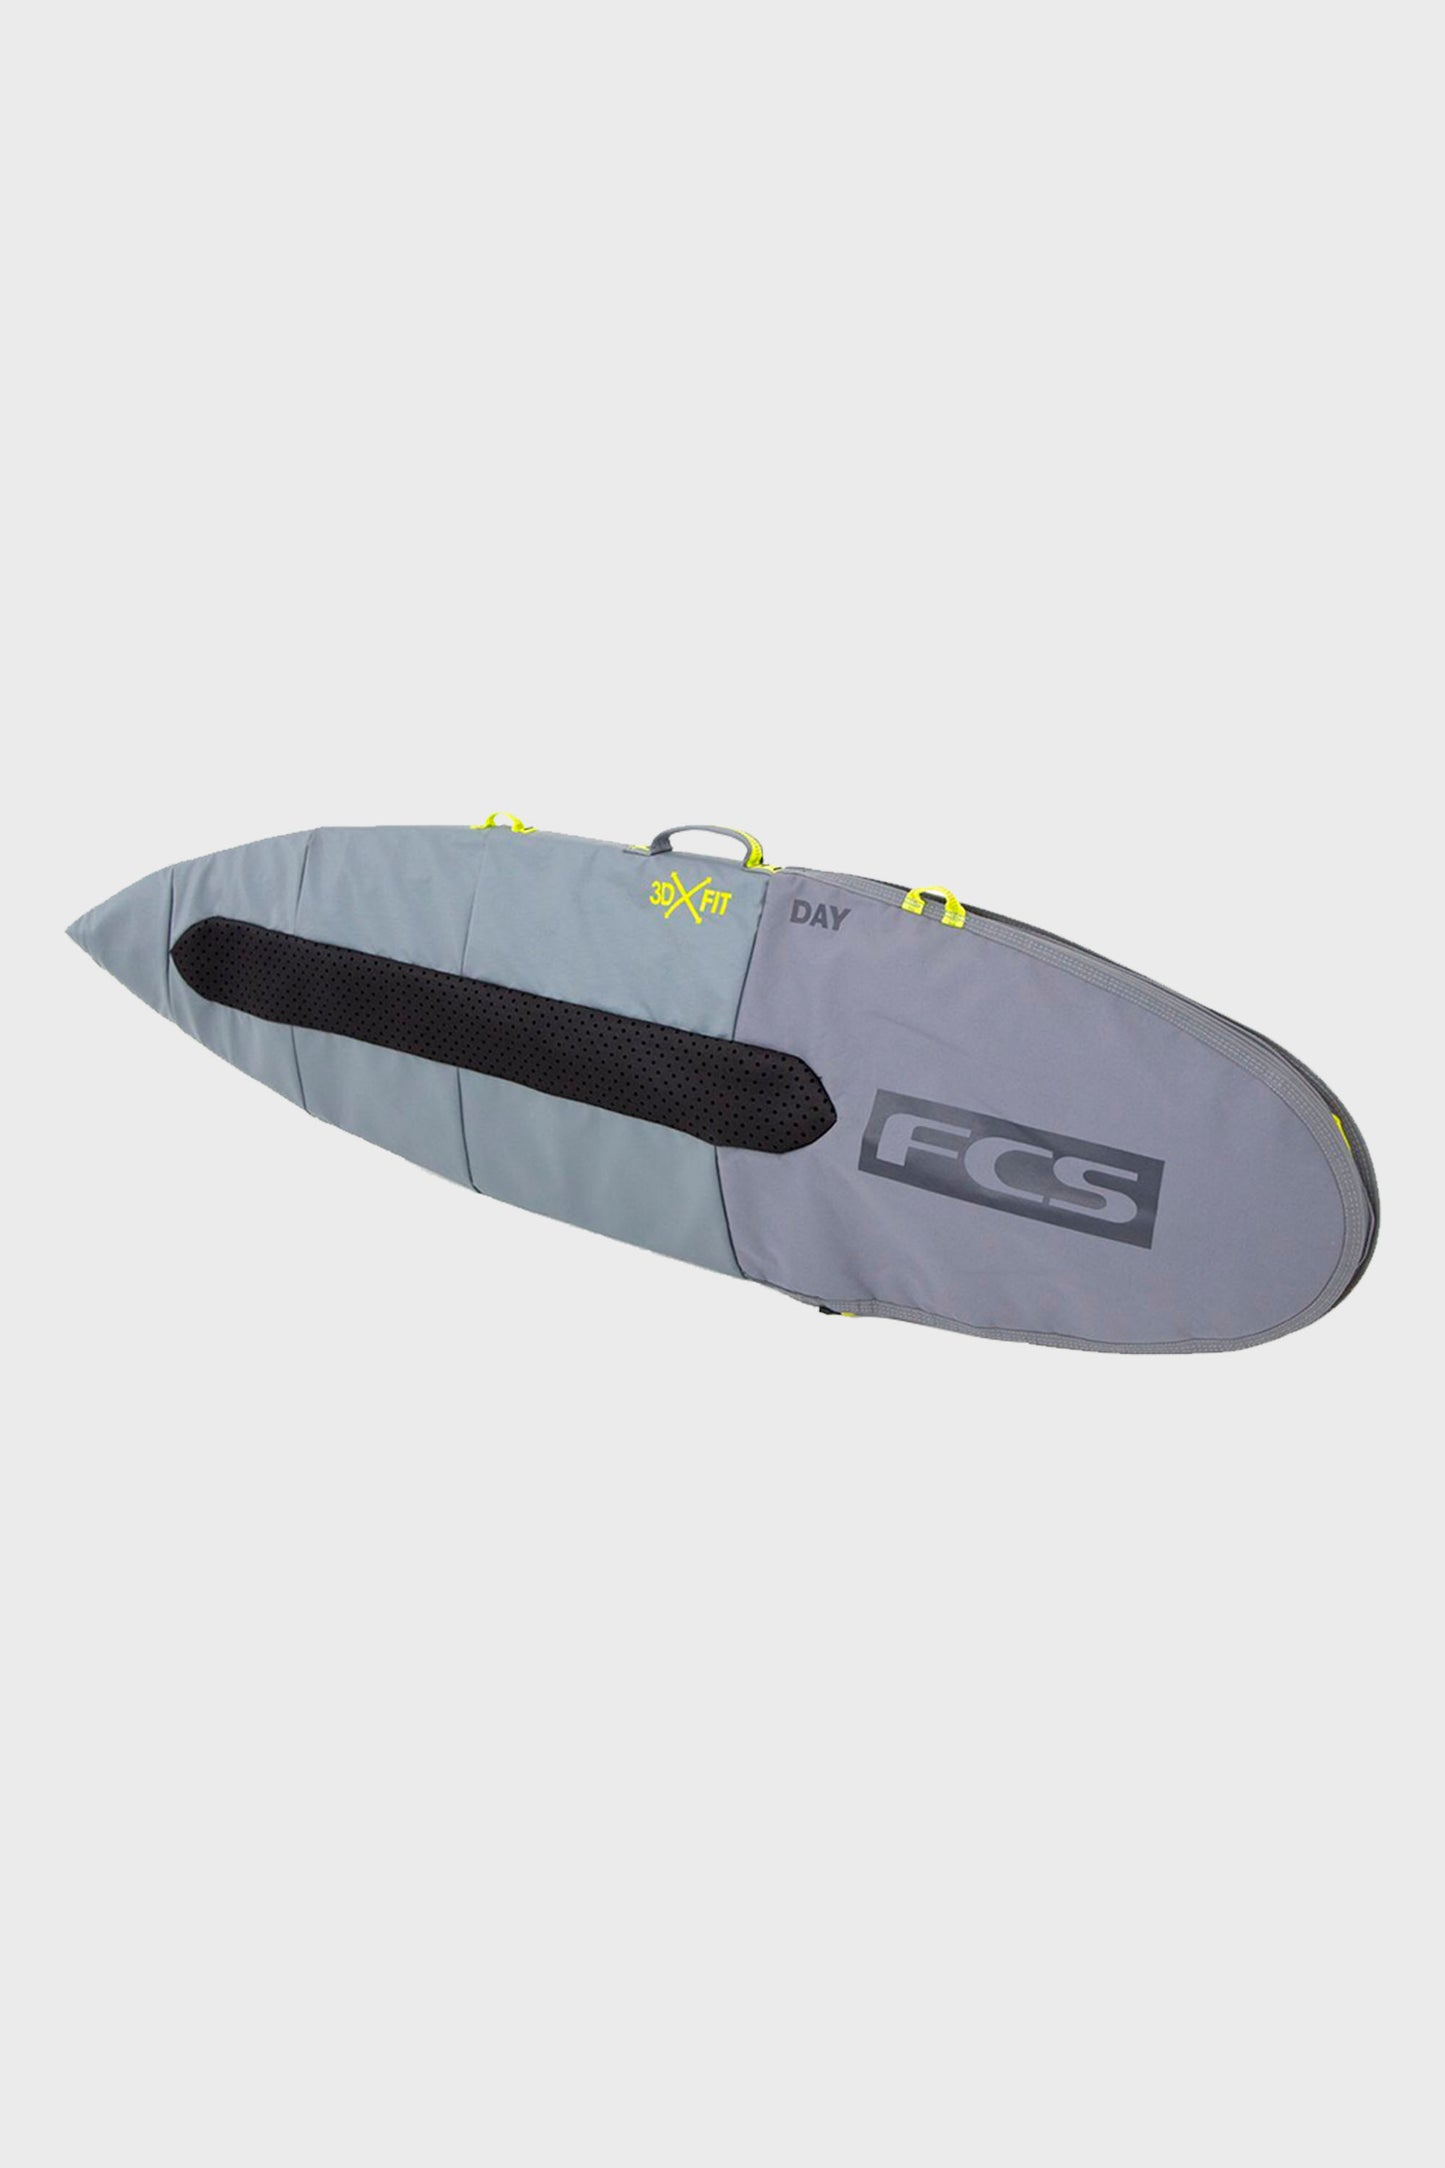 
                  
                    Pukas-Surf-Shop-FCS-boardbags-Day-All-Purpose-6.7
                  
                